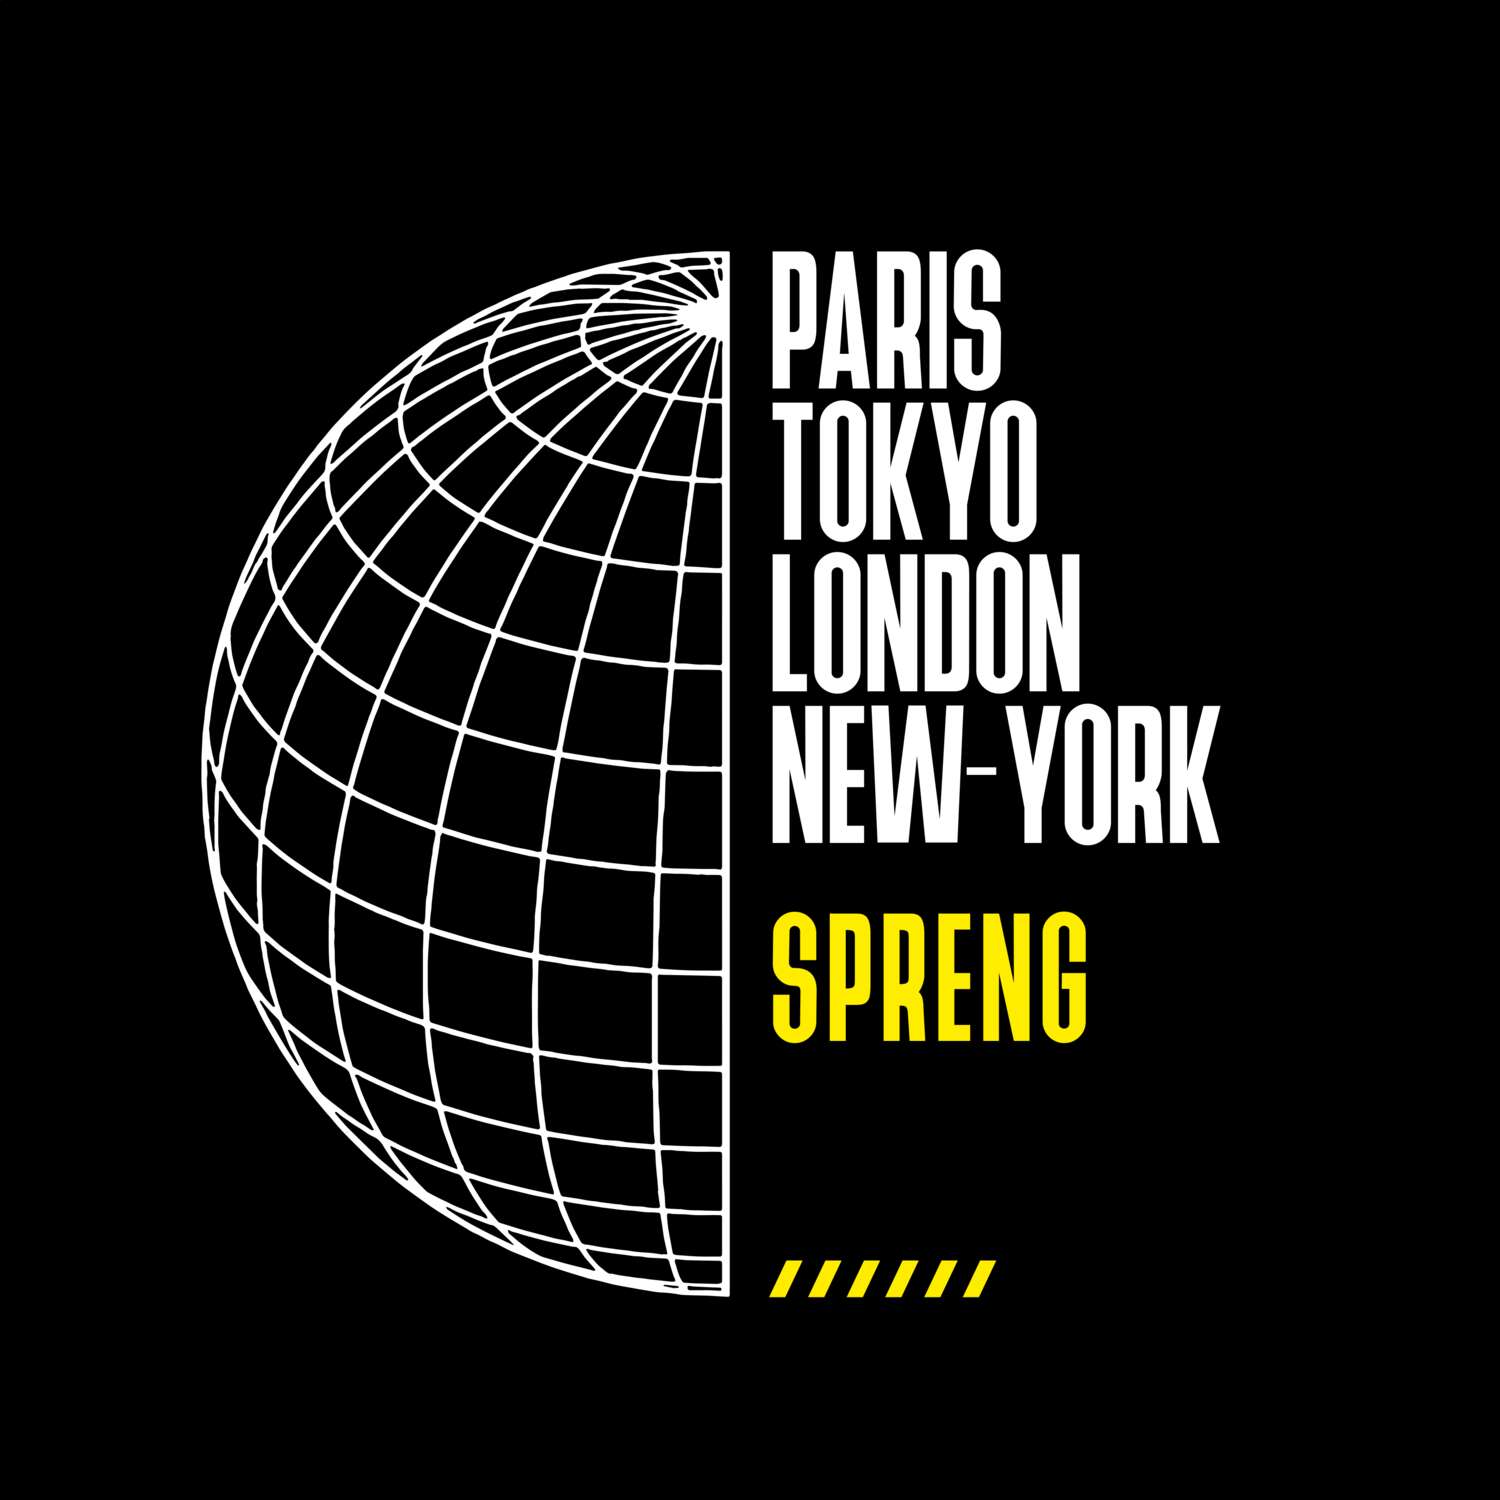 Spreng T-Shirt »Paris Tokyo London«